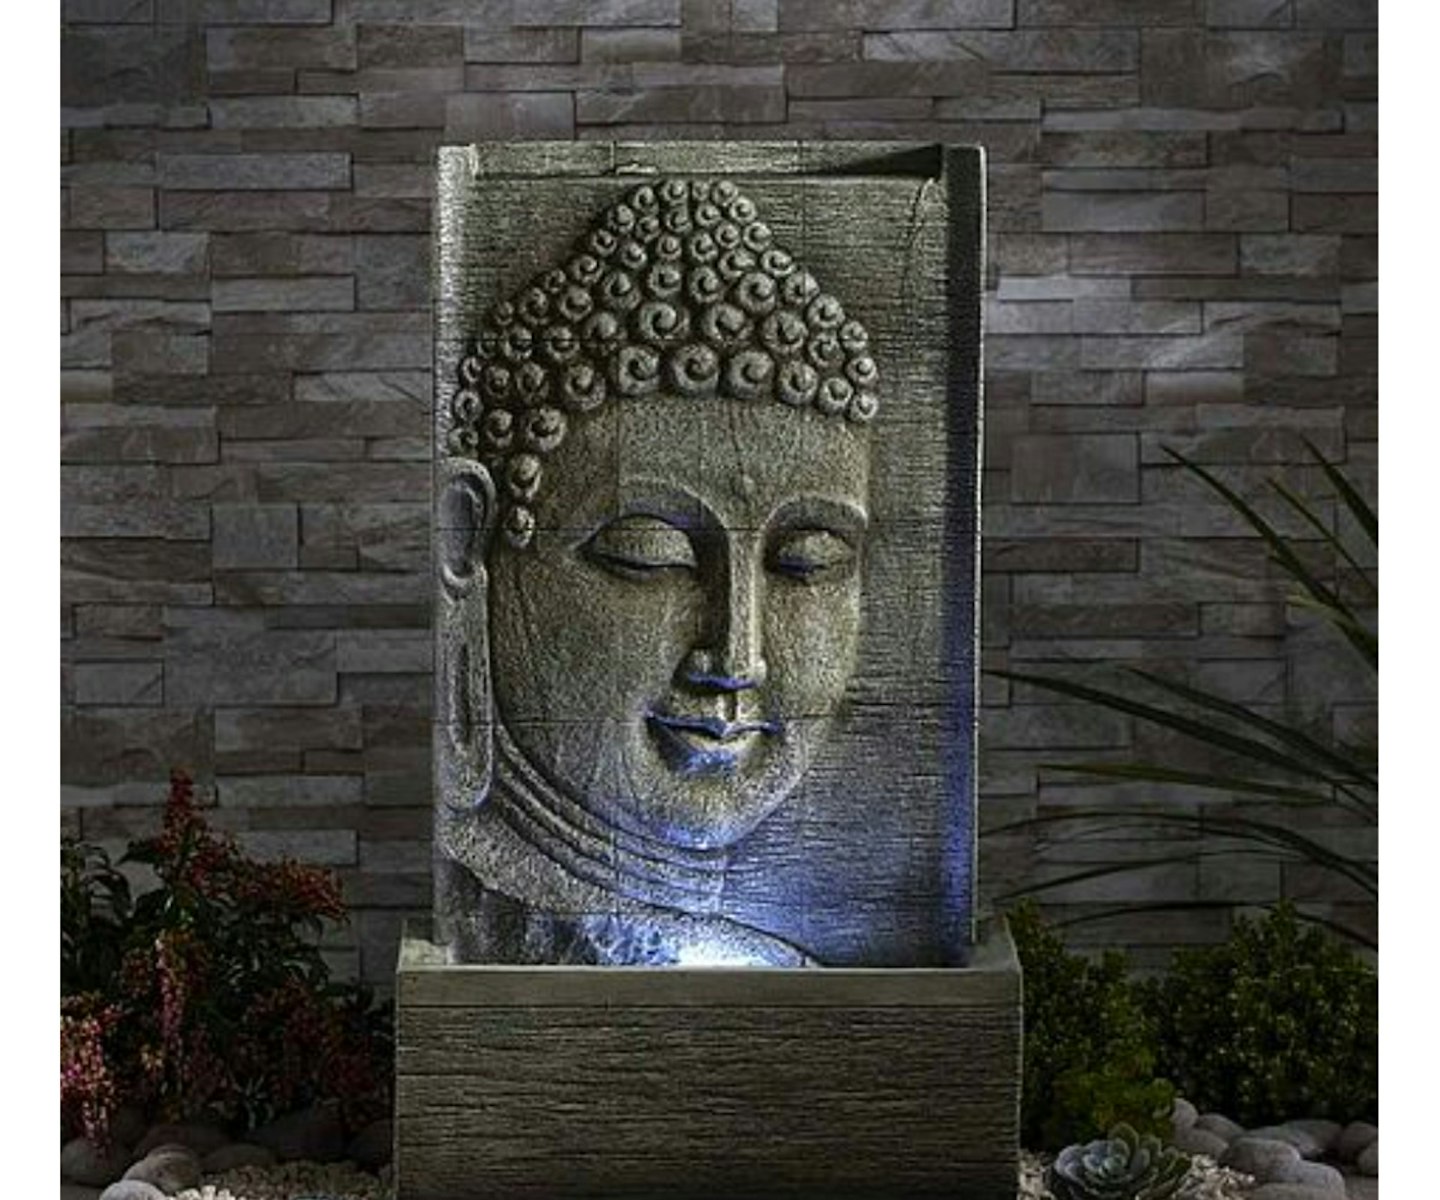 Serenity Buddha Water Wall Feature